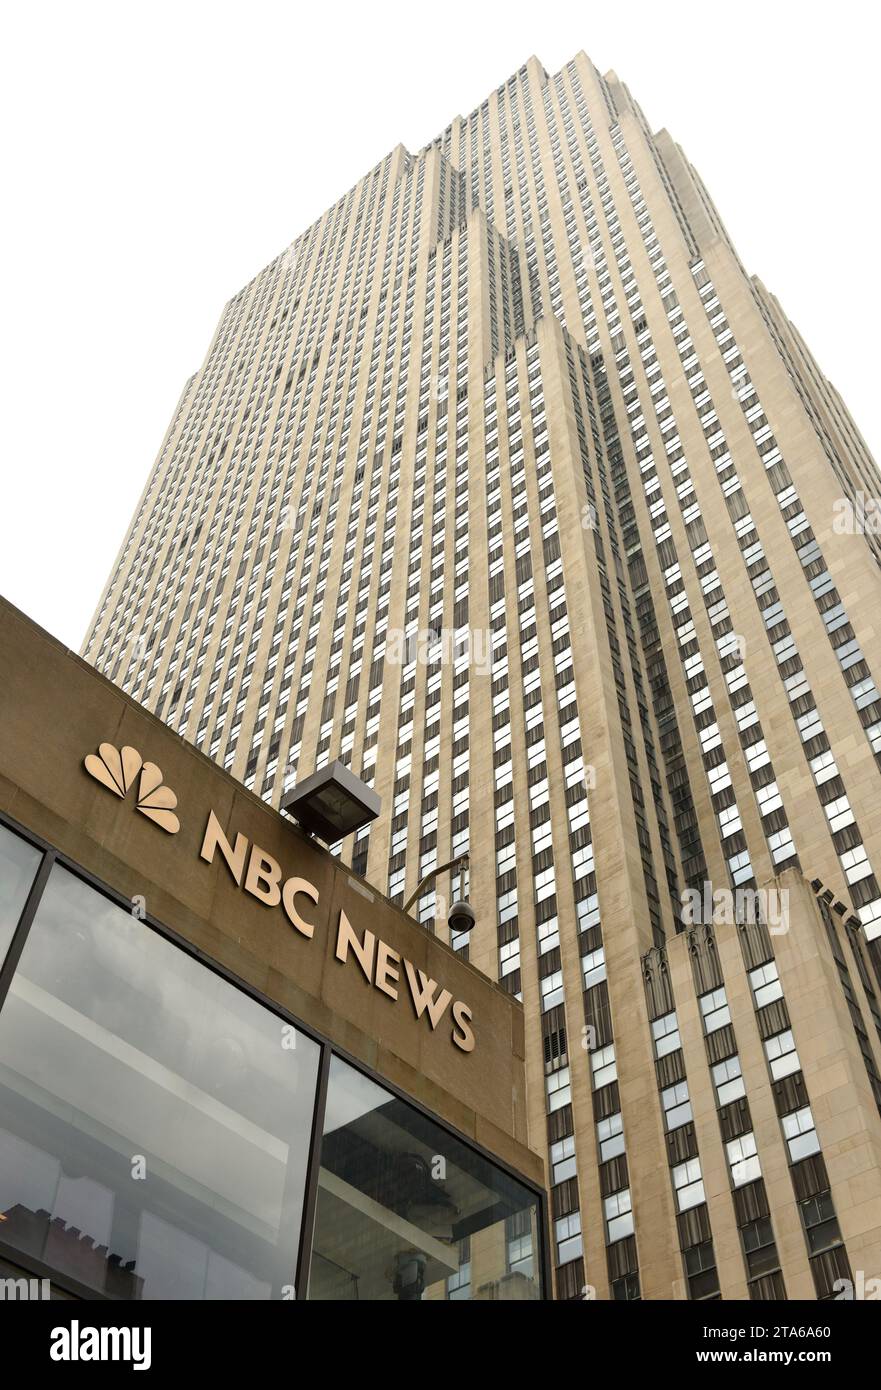 New York, USA - 26. Mai 2018: NBC Studios im historischen Rockefeller Plaza von 30 in New York City. Stockfoto